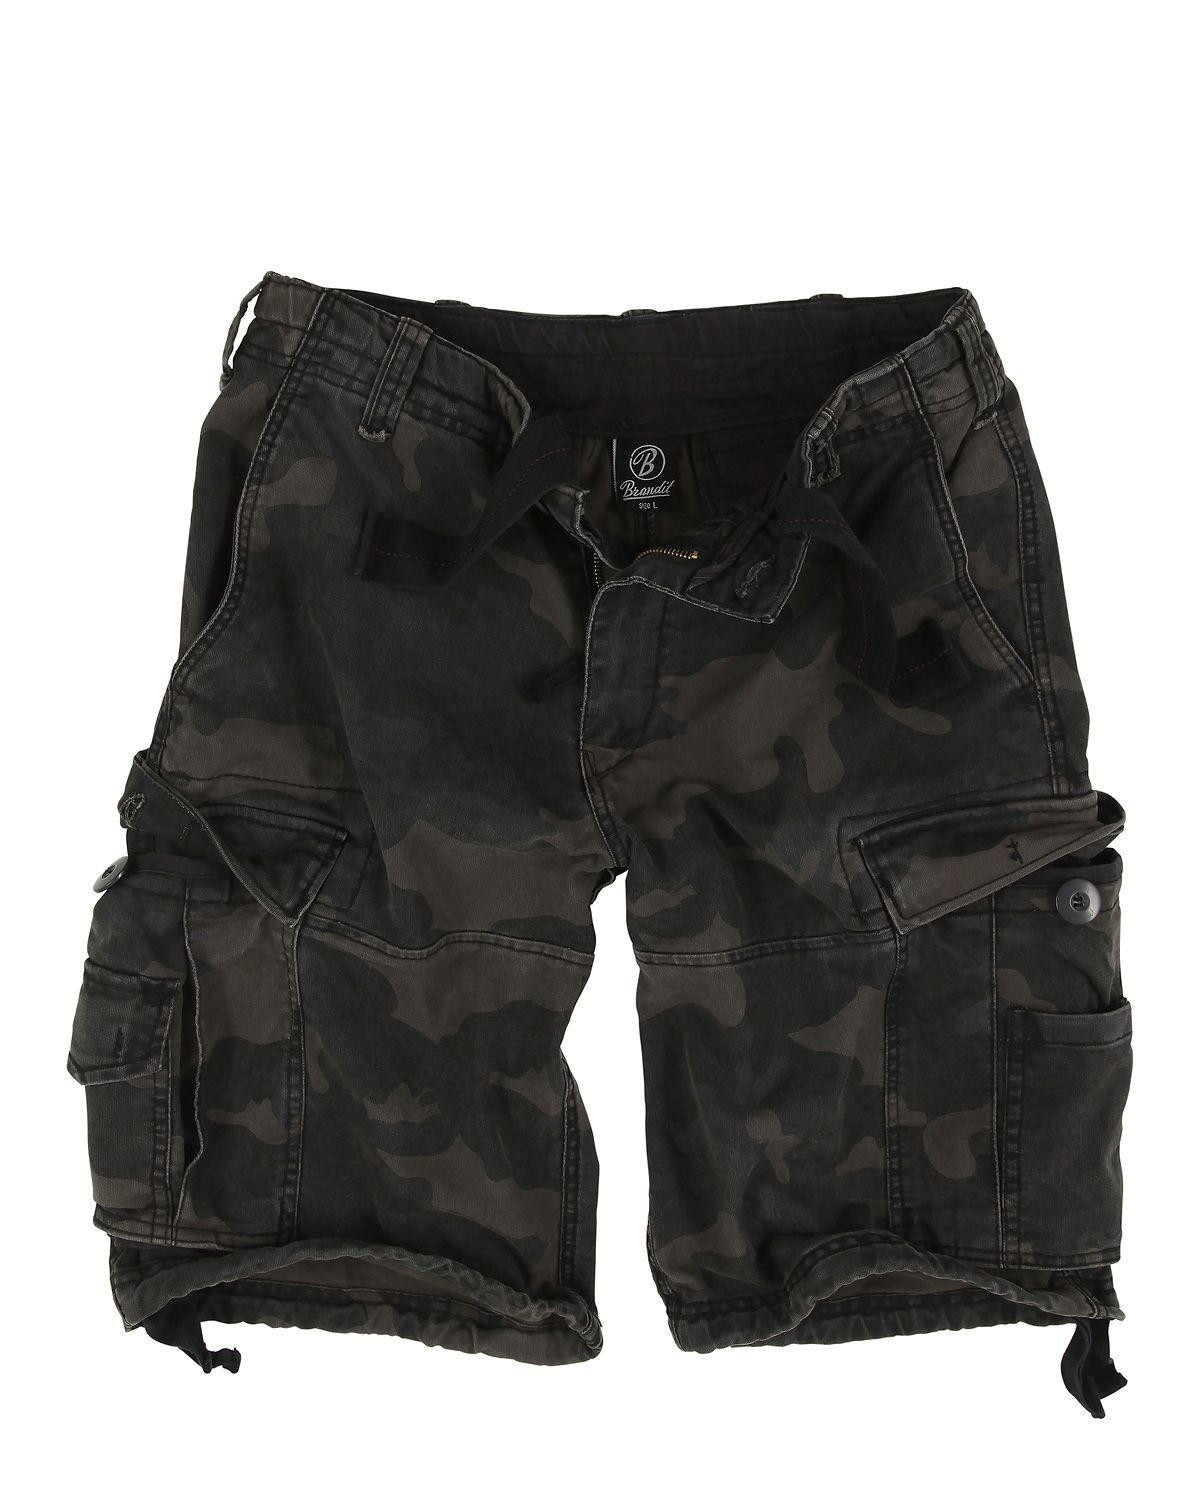 Brandit Vintage Shorts (Black Camo, S)